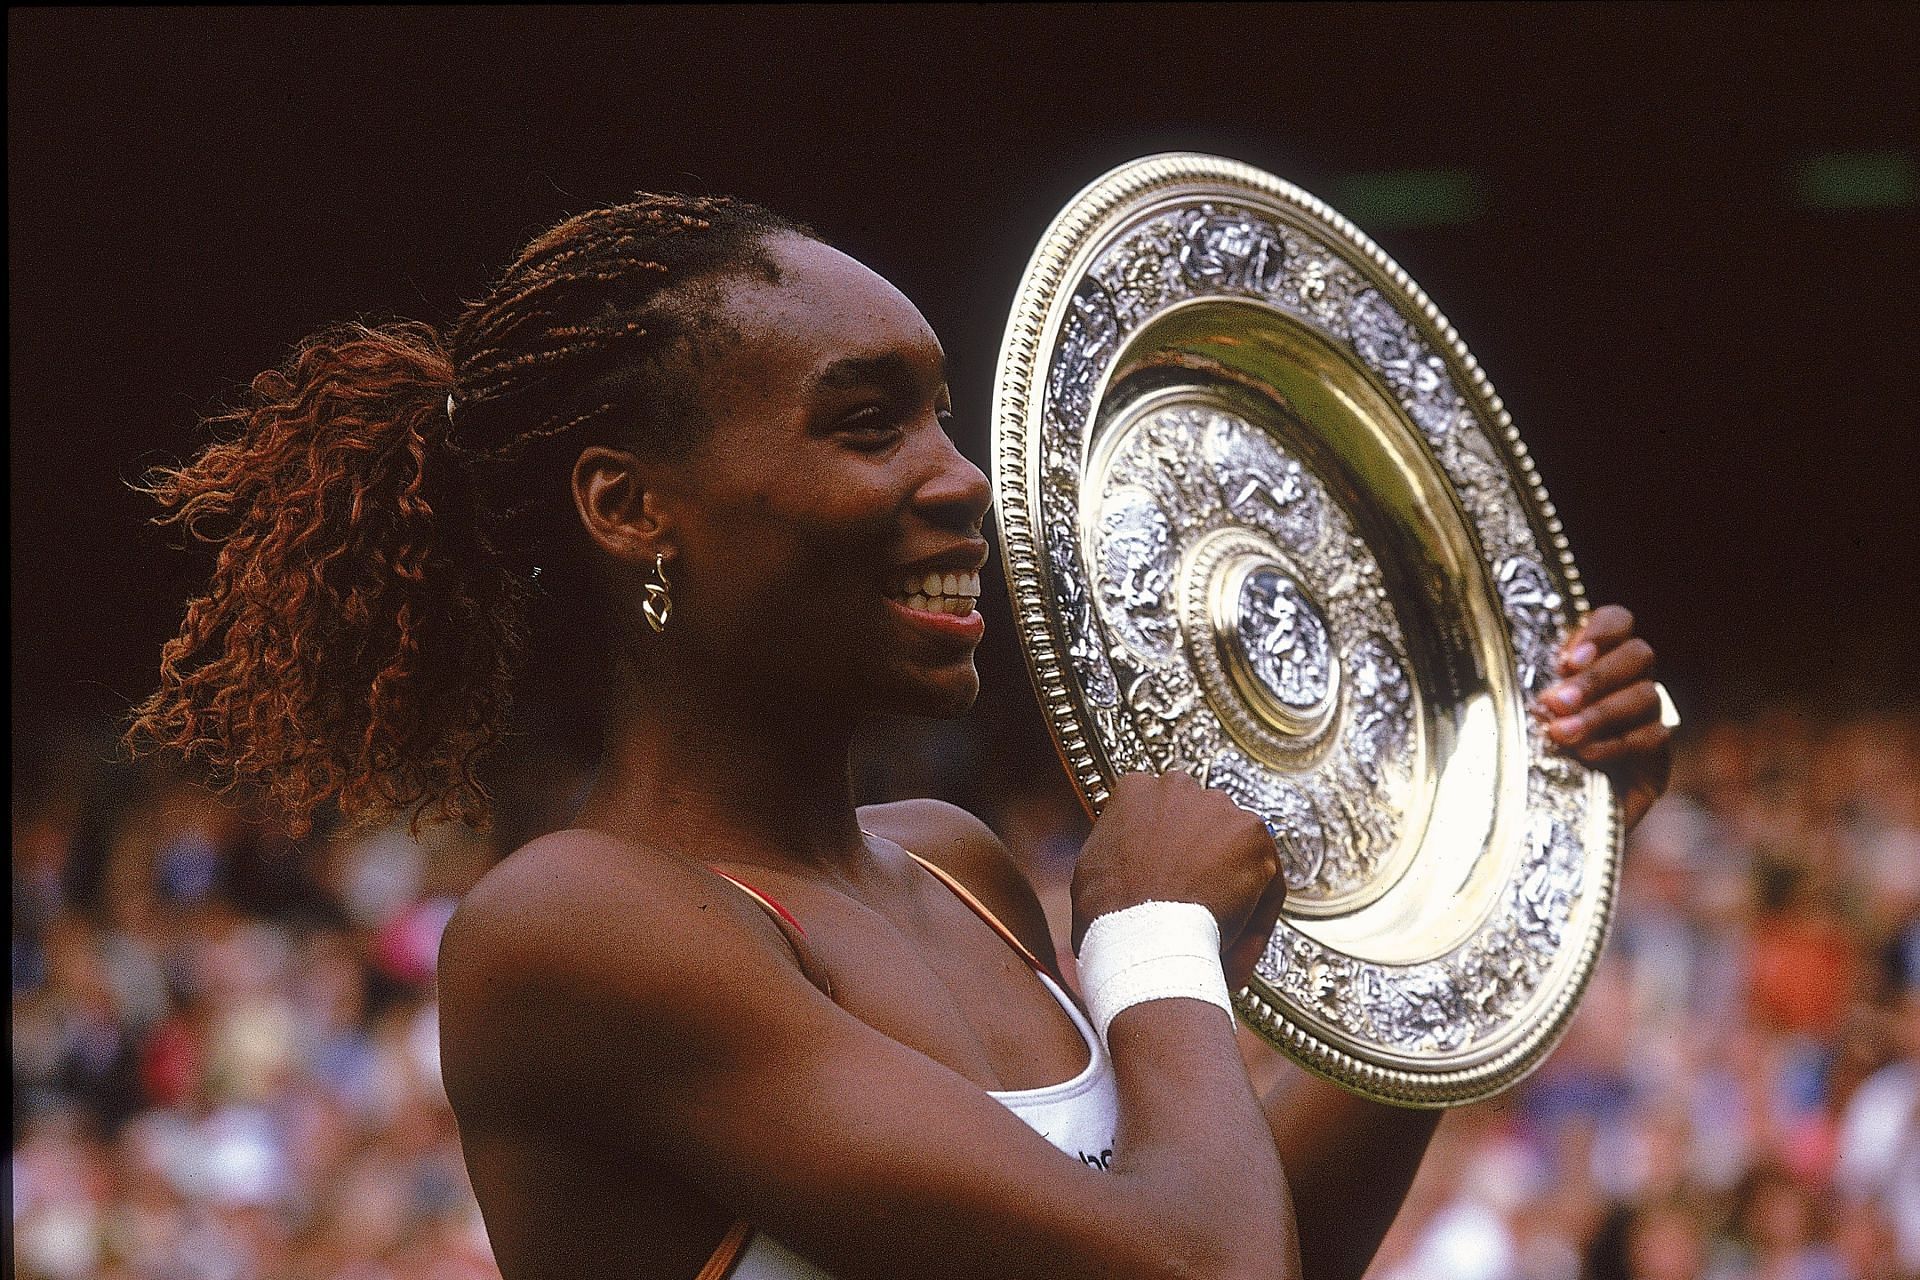 Venus Williams won Wimbledon 2000 at the age of 20